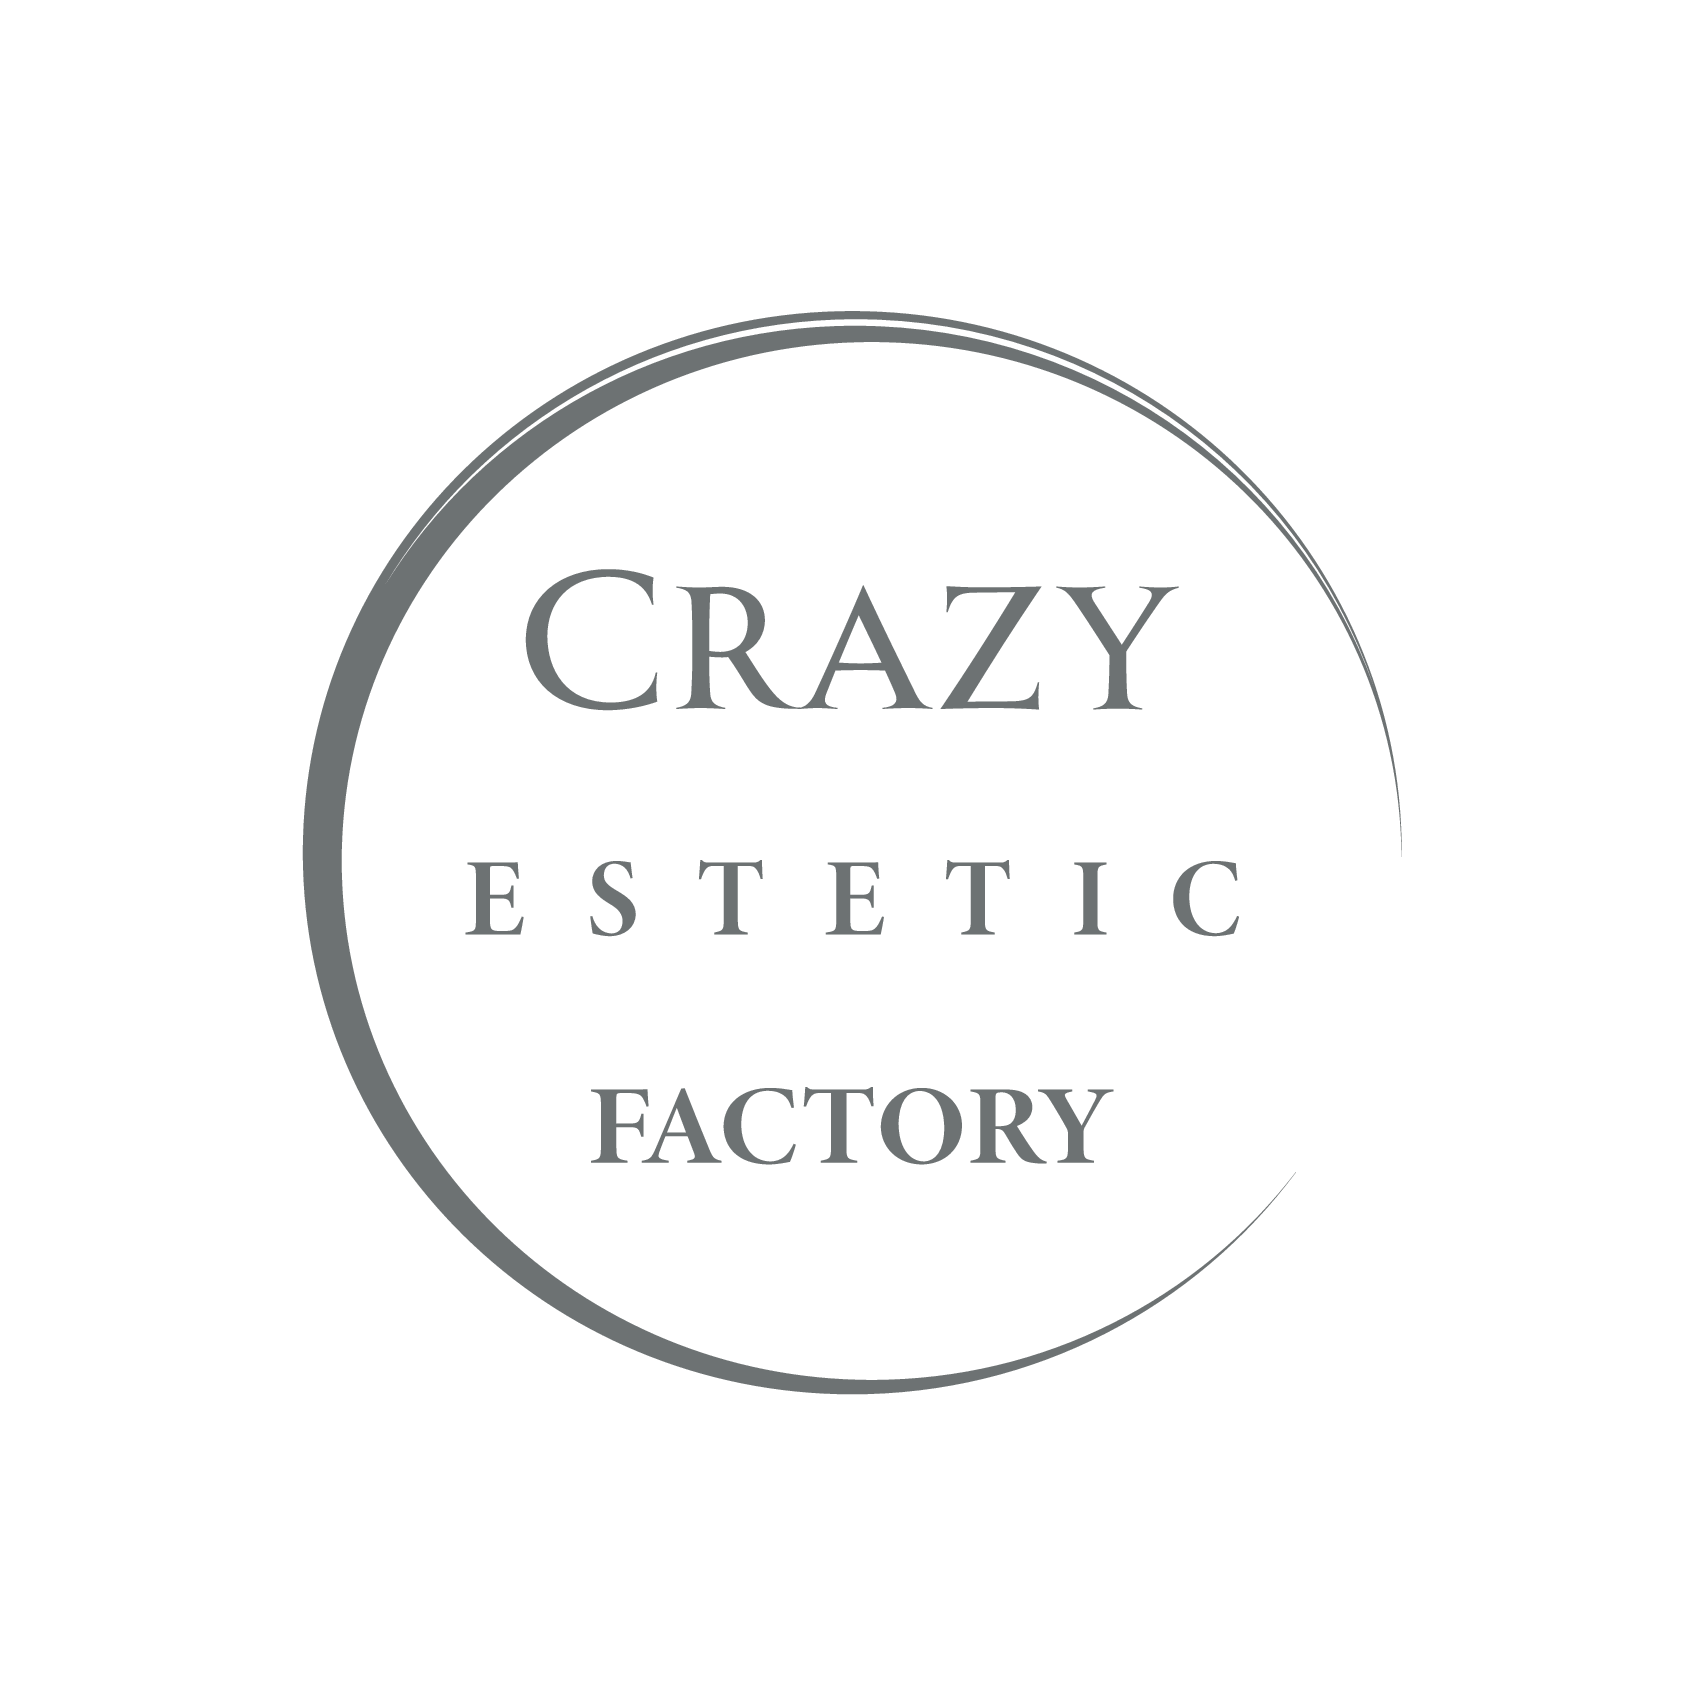 Crazy estetic factory